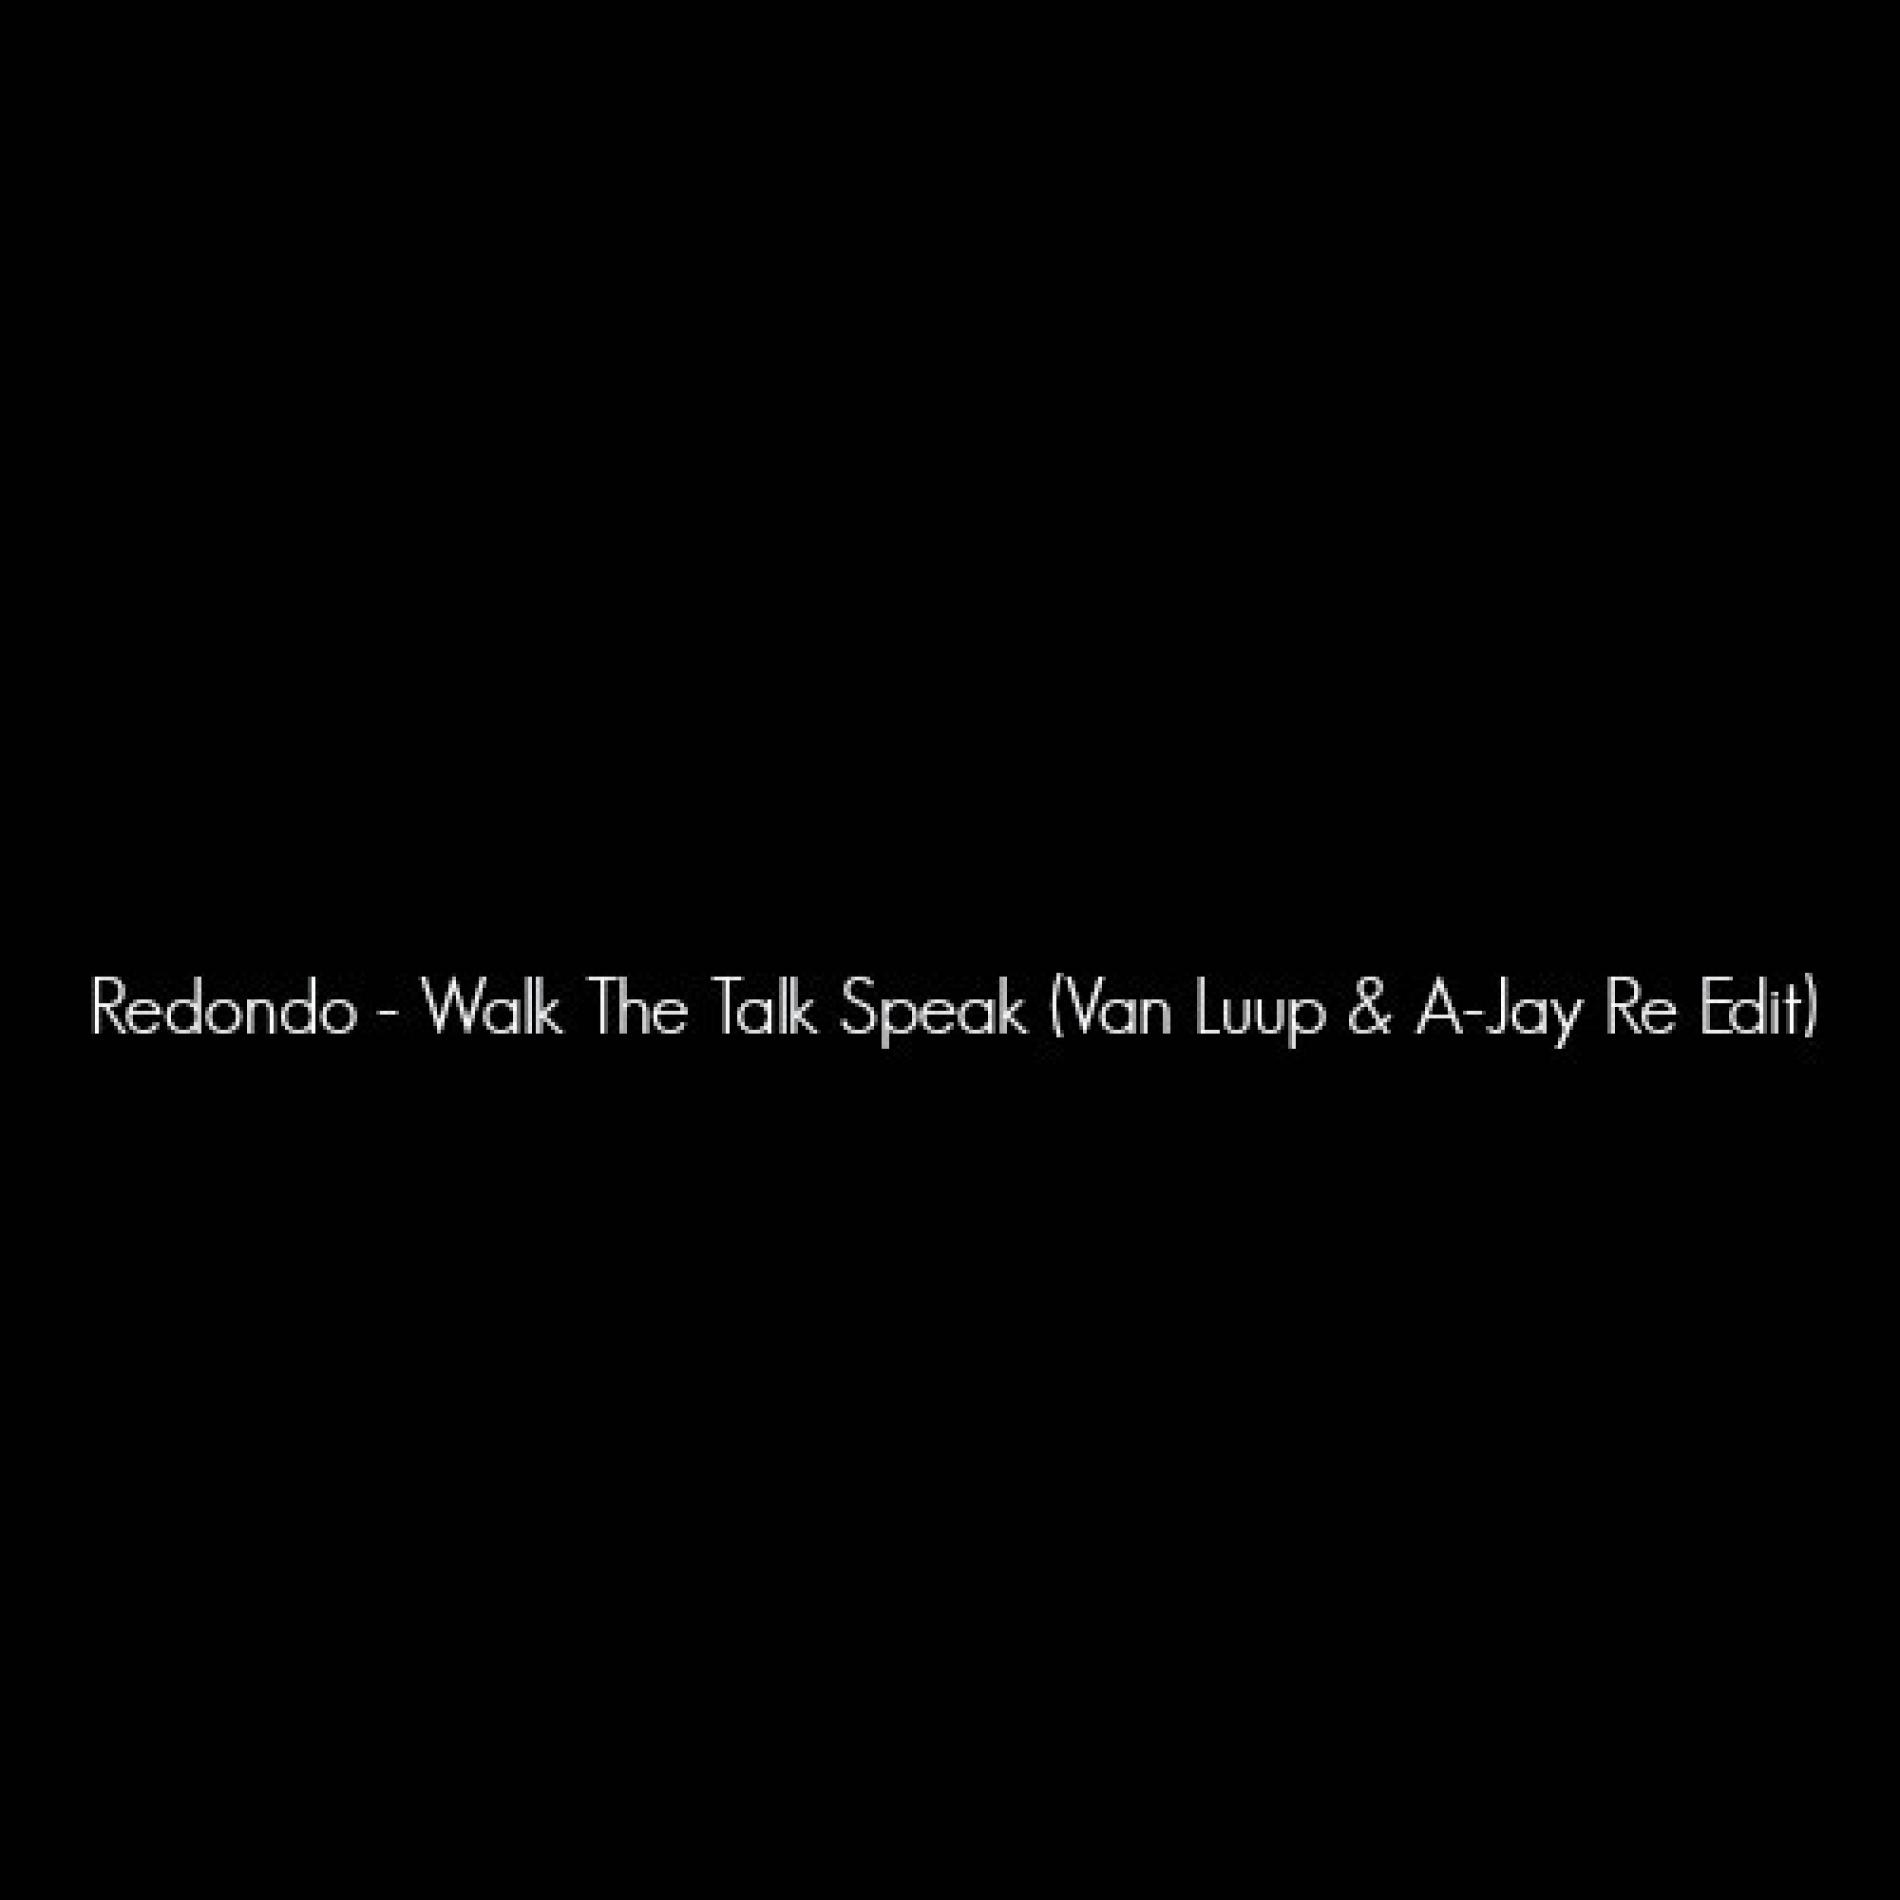 Walk The Talk Speak (Van Luup & A-Jay Re Edit)